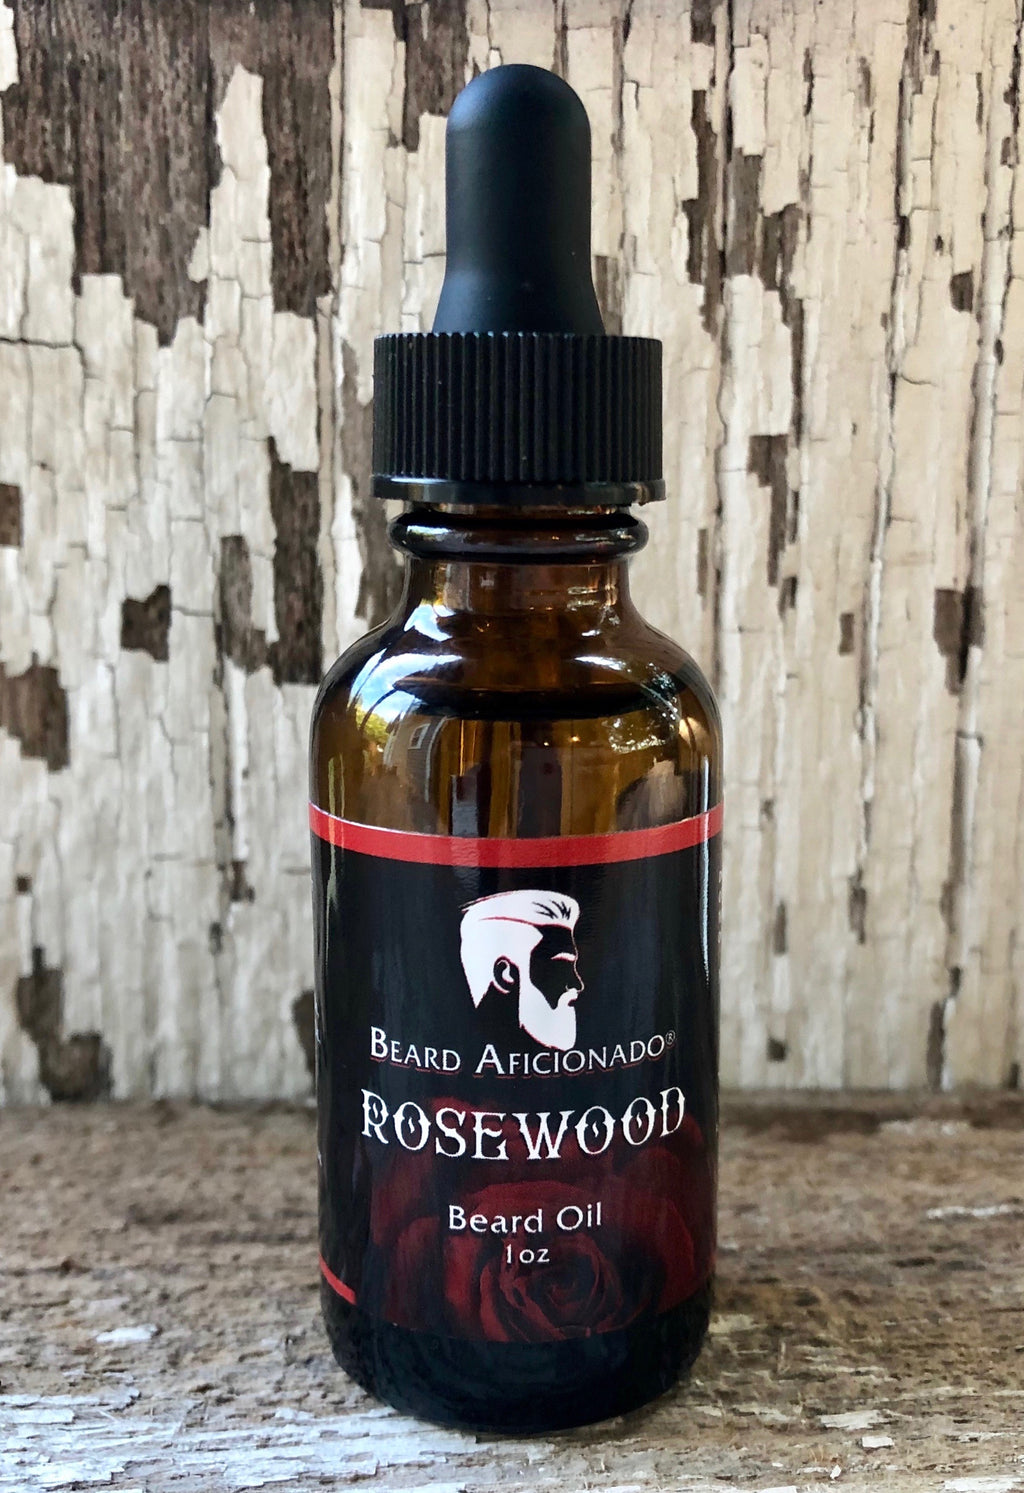 Beard Aficionado Rosewood Beard Oil